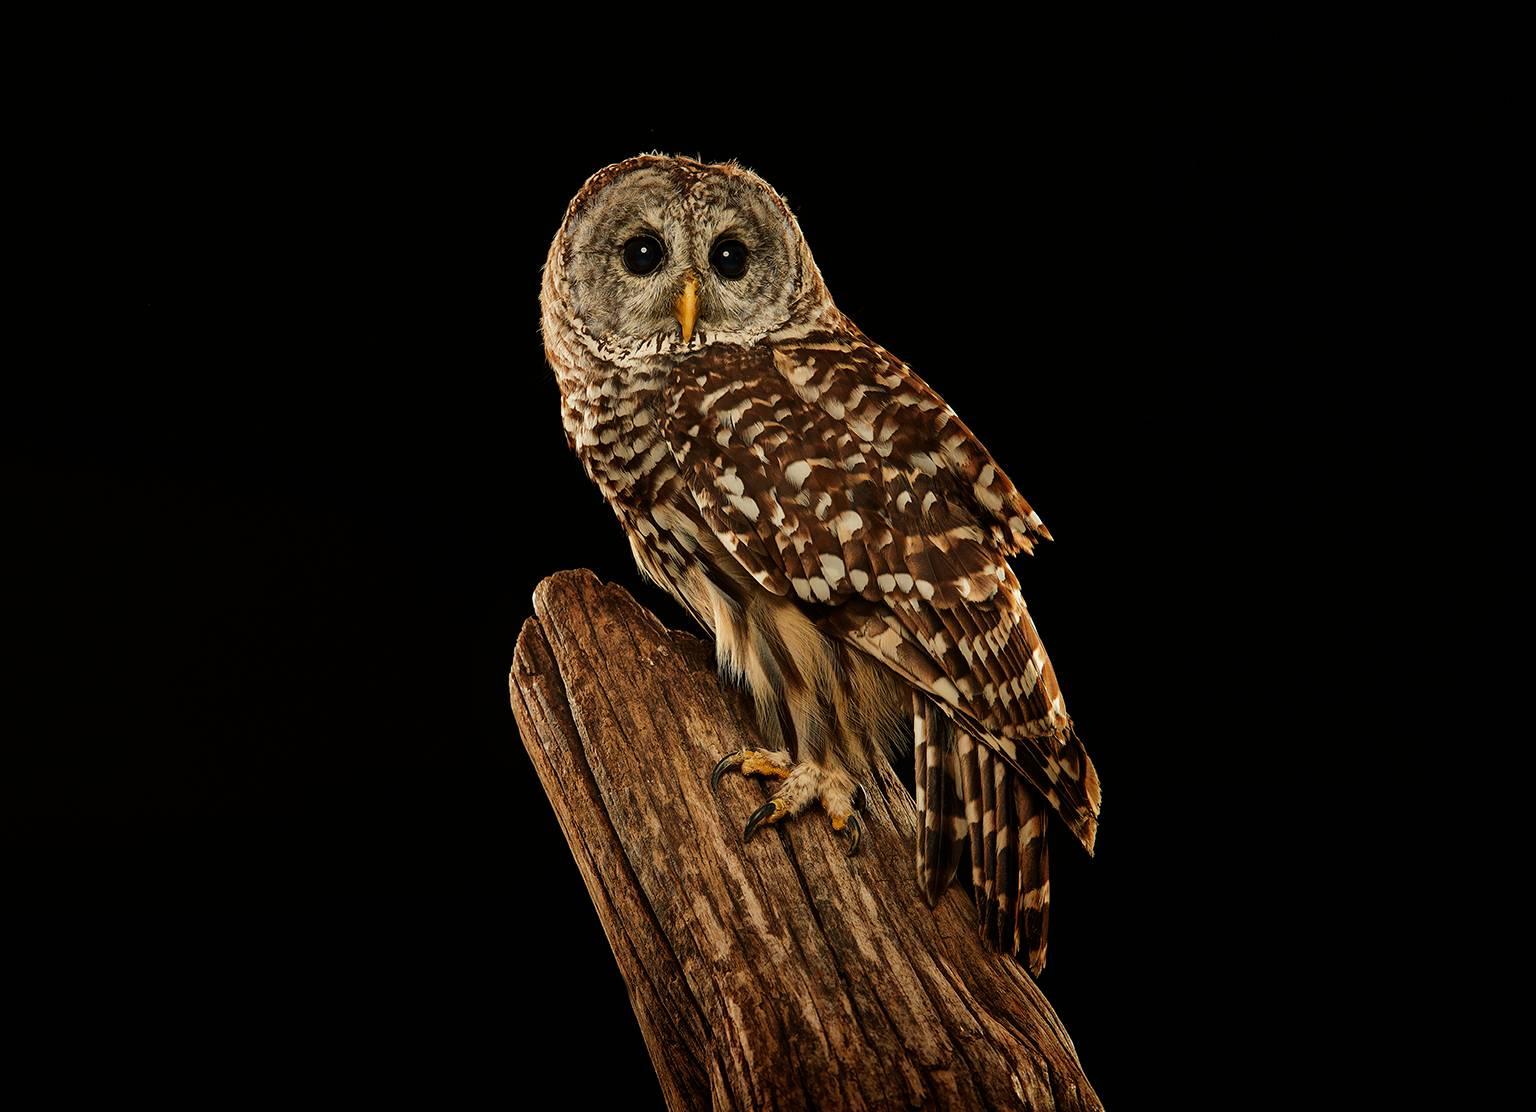 Chris Gordaneer Color Photograph - Birds of Prey - Barred Owl No. 10